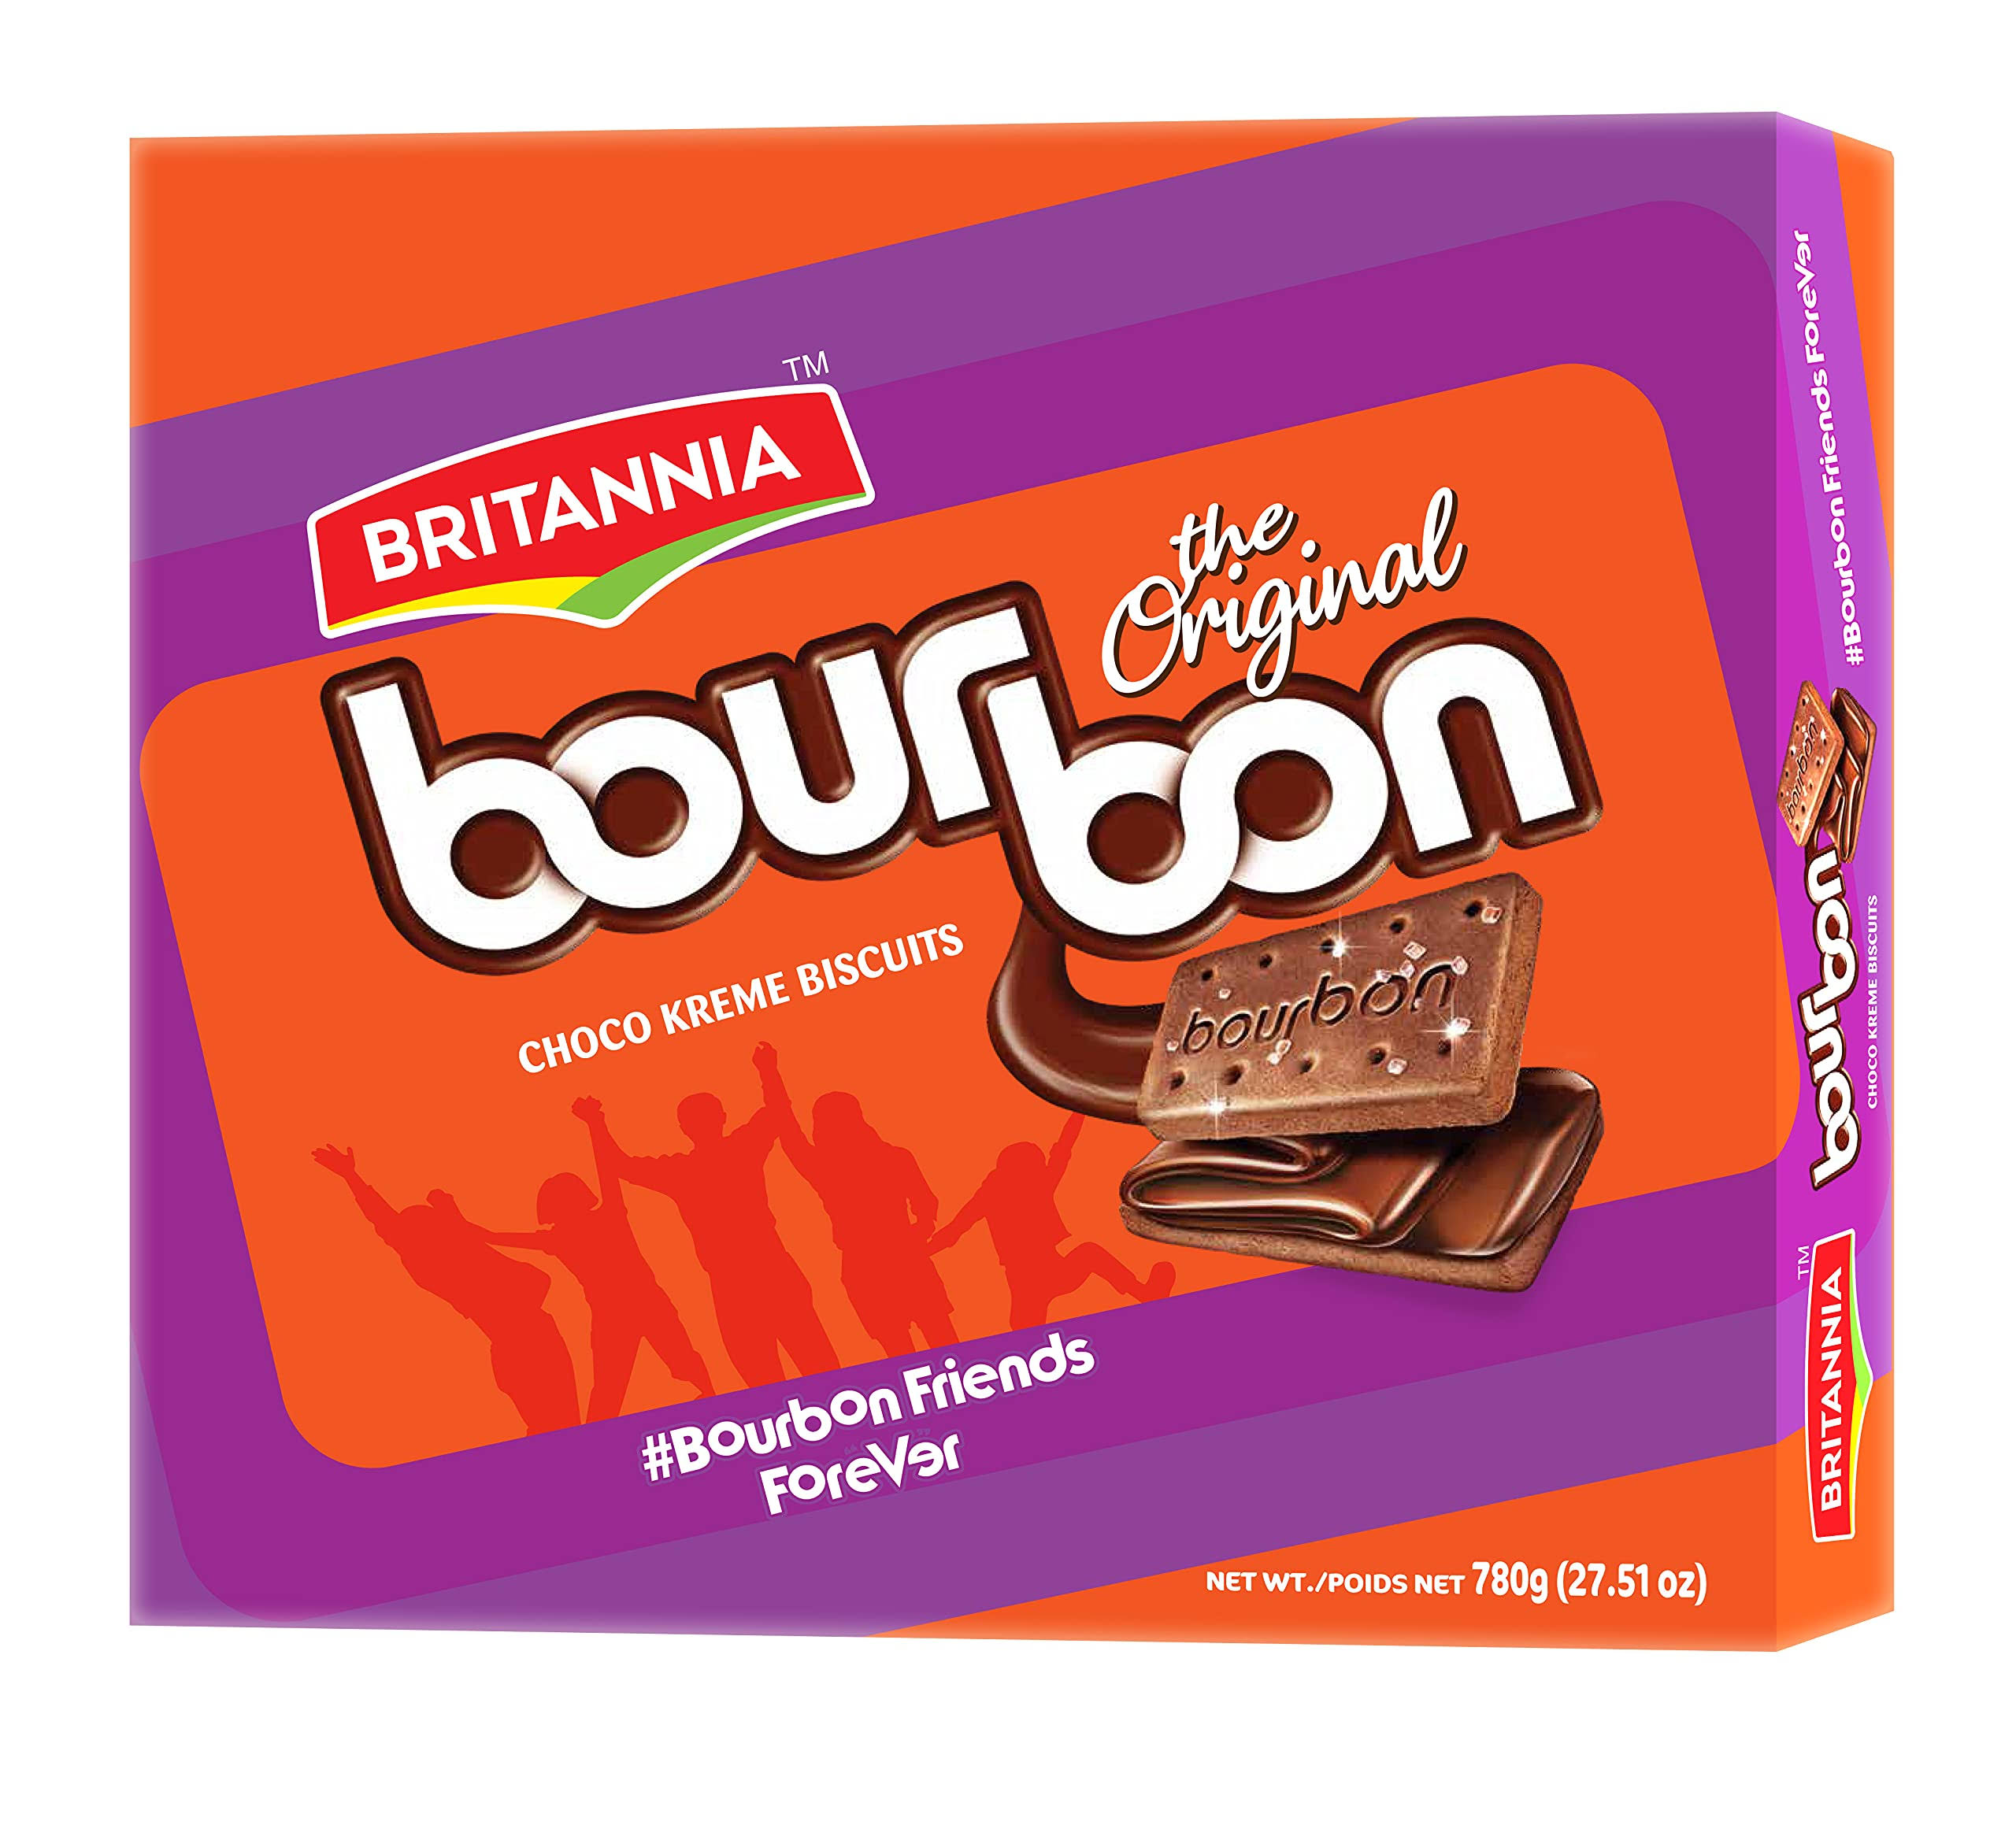 BRITANNIA Bourbon the Original - Choco Creme Biscuits 27.51 (Pack of 1